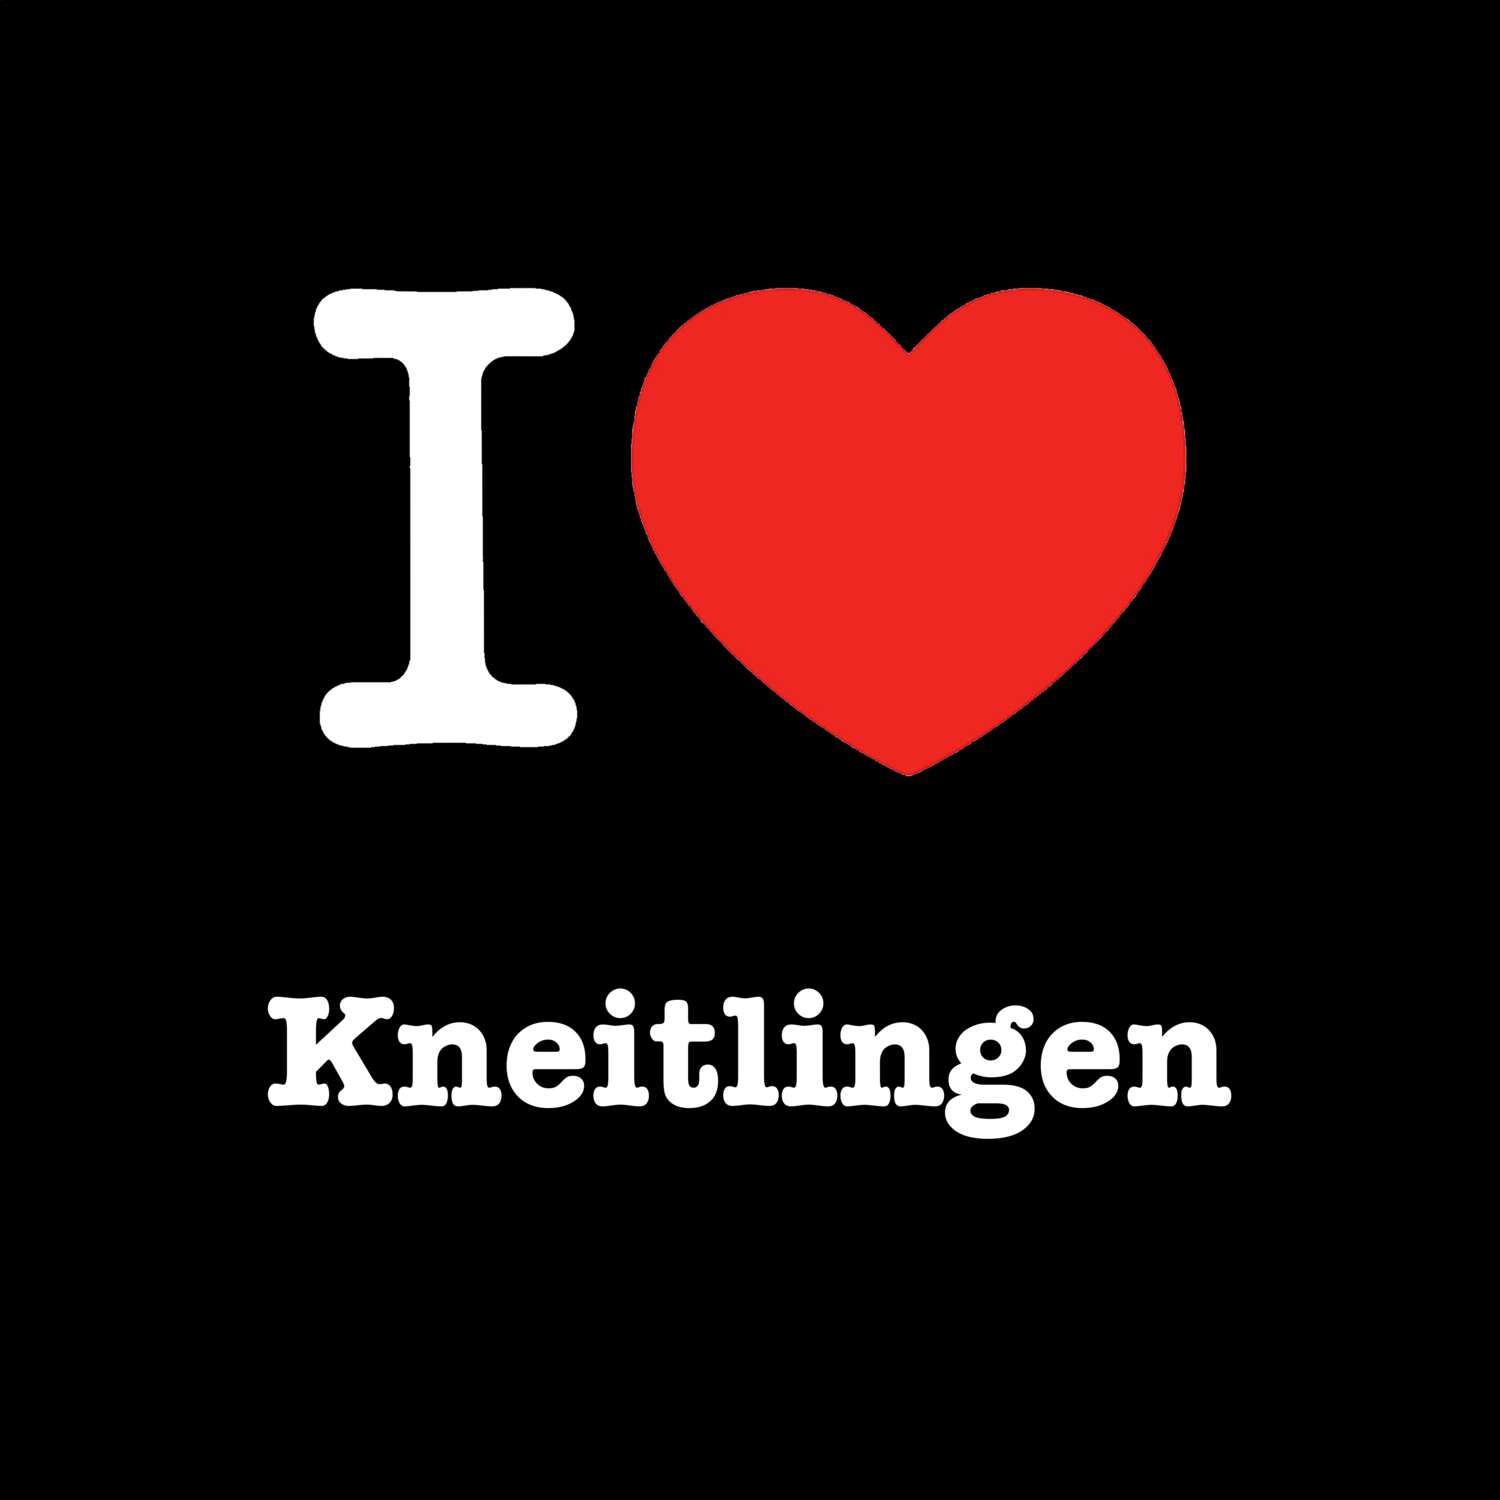 Kneitlingen T-Shirt »I love«